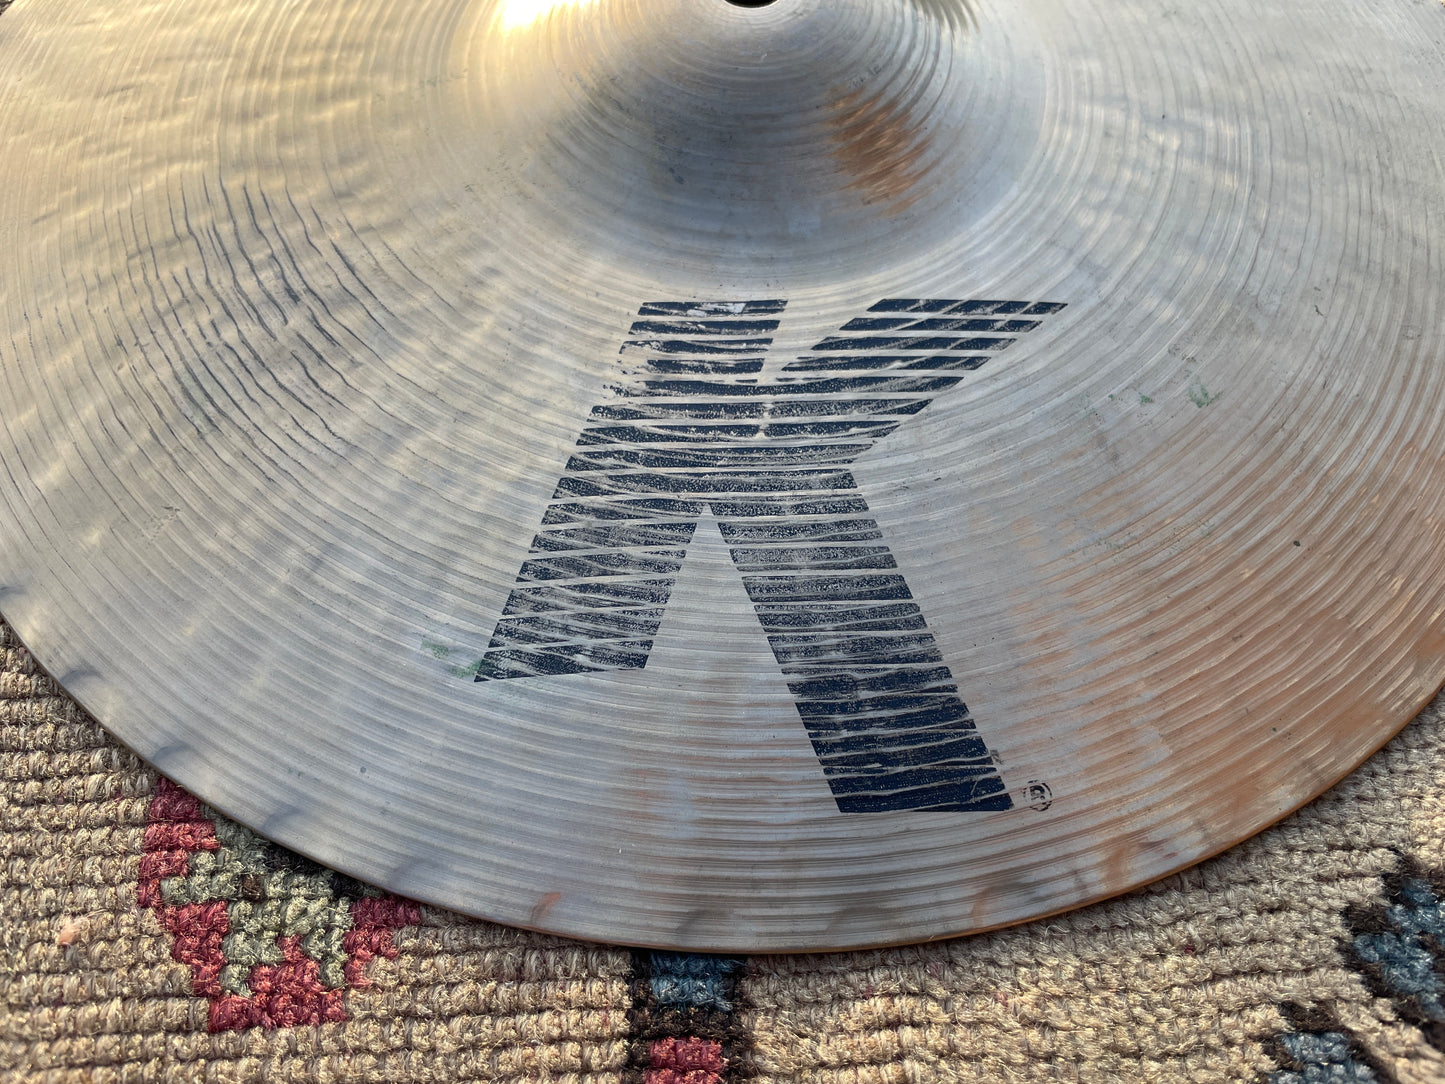 13" Zildjian K Custom Special Dry Hi-Hat Bottom Cymbal 1136g K0959